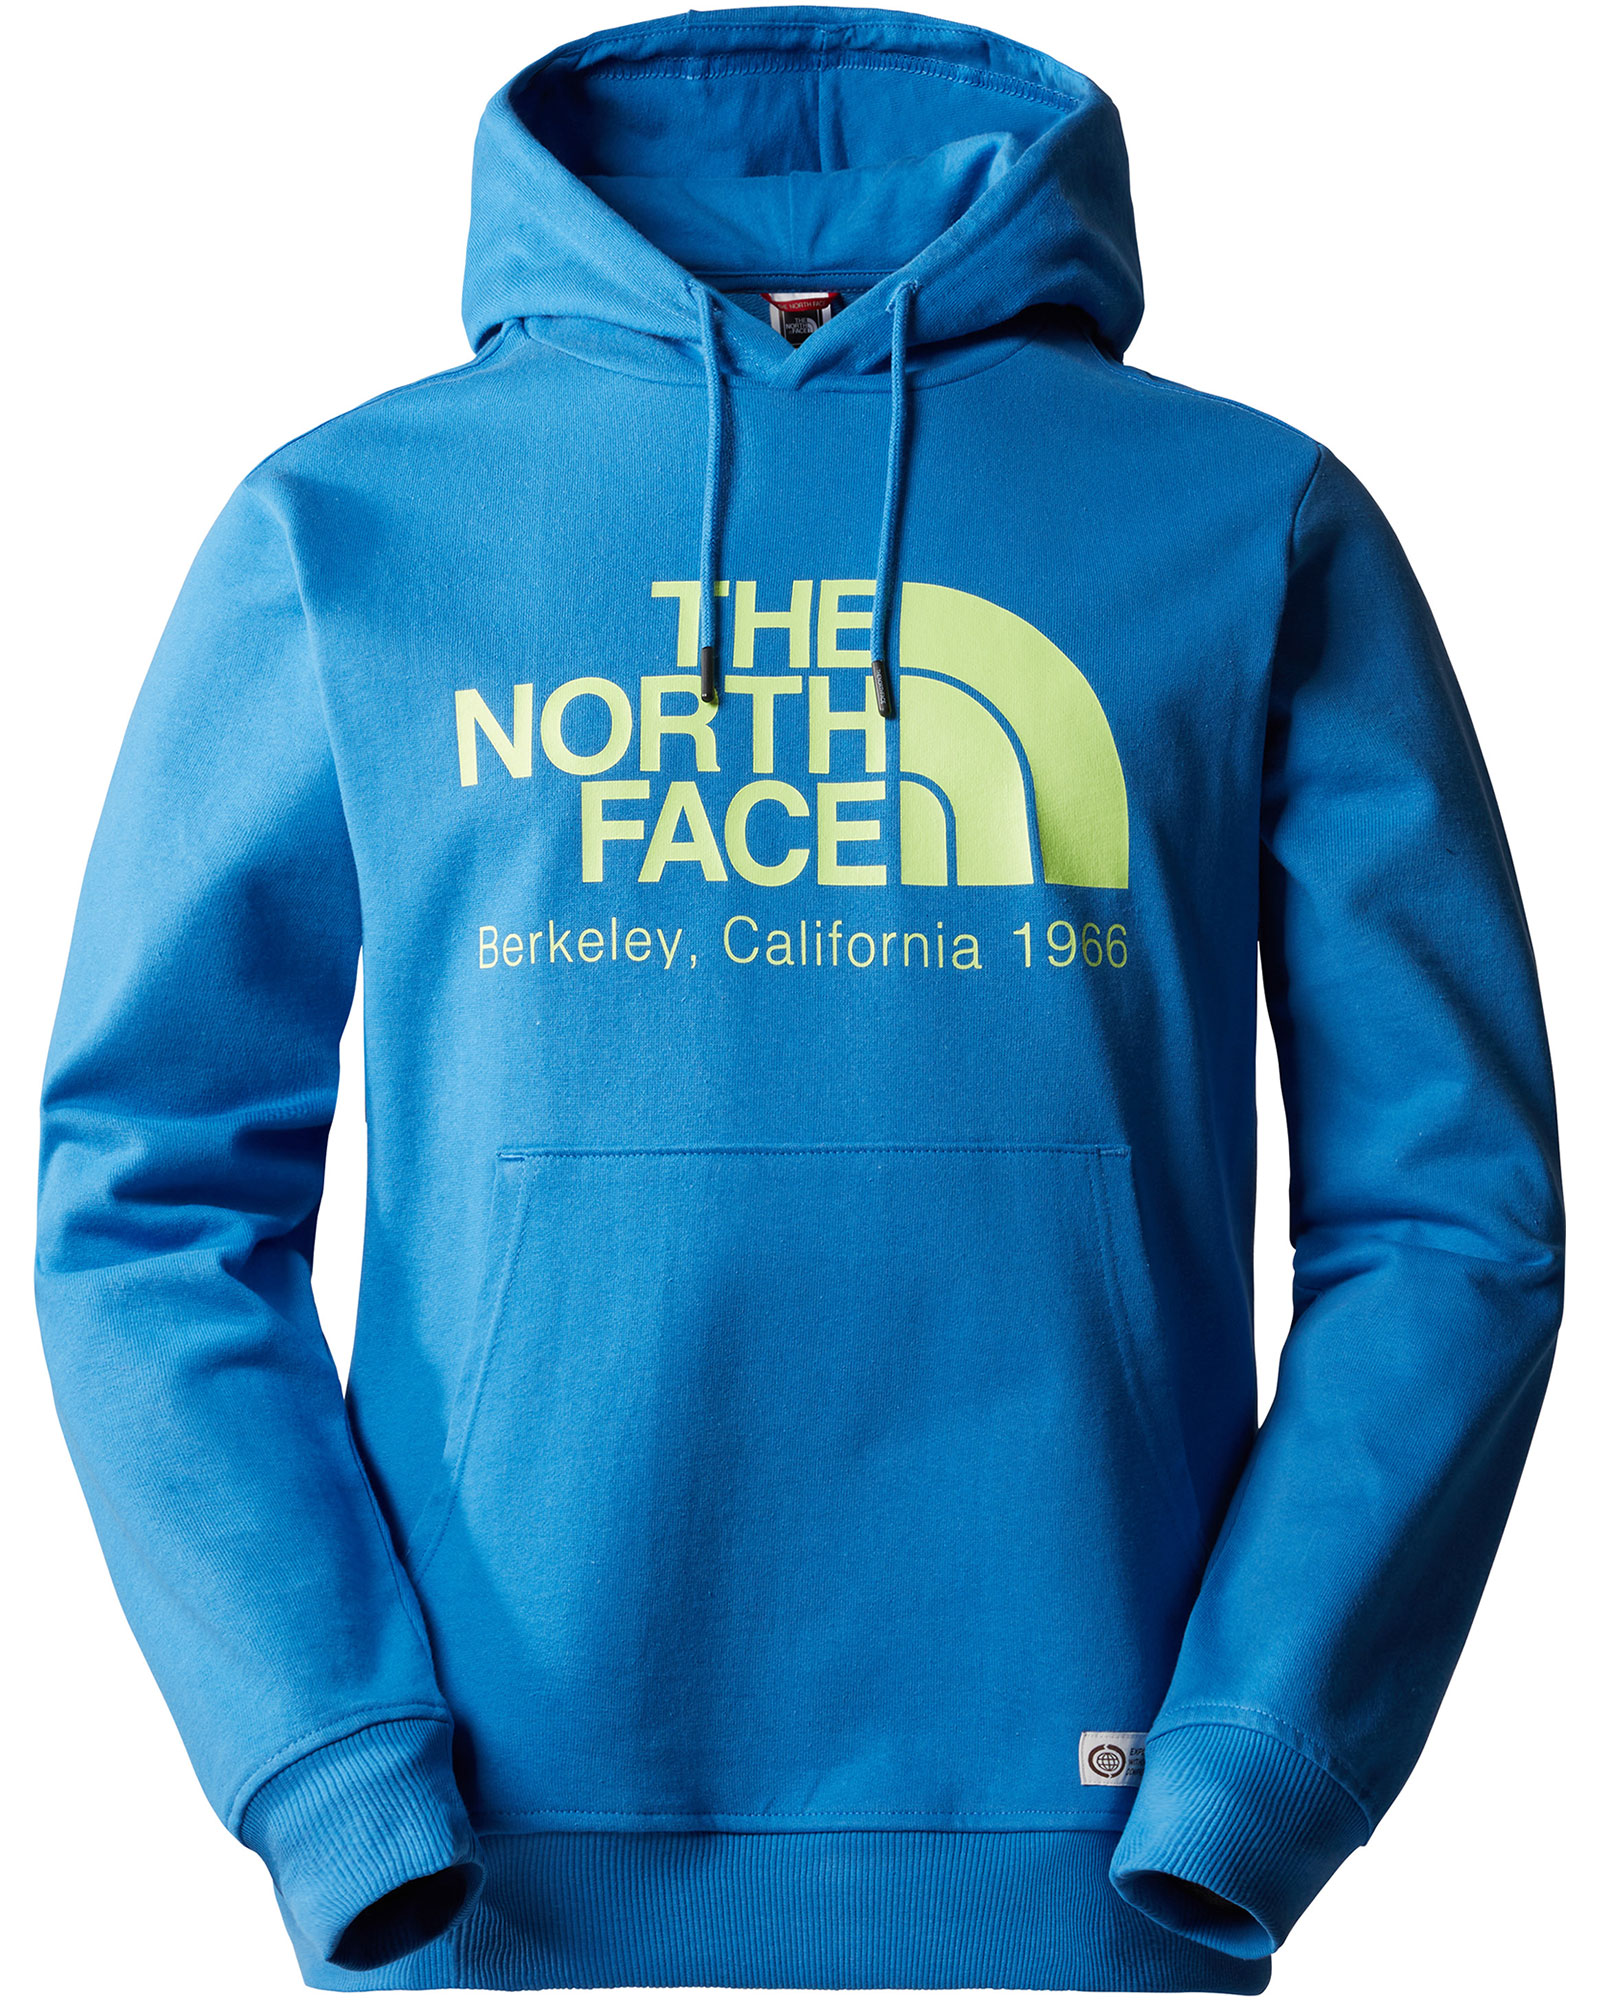 The North Face Men’s Berkeley California Hoodie - Super Sonic Blue S